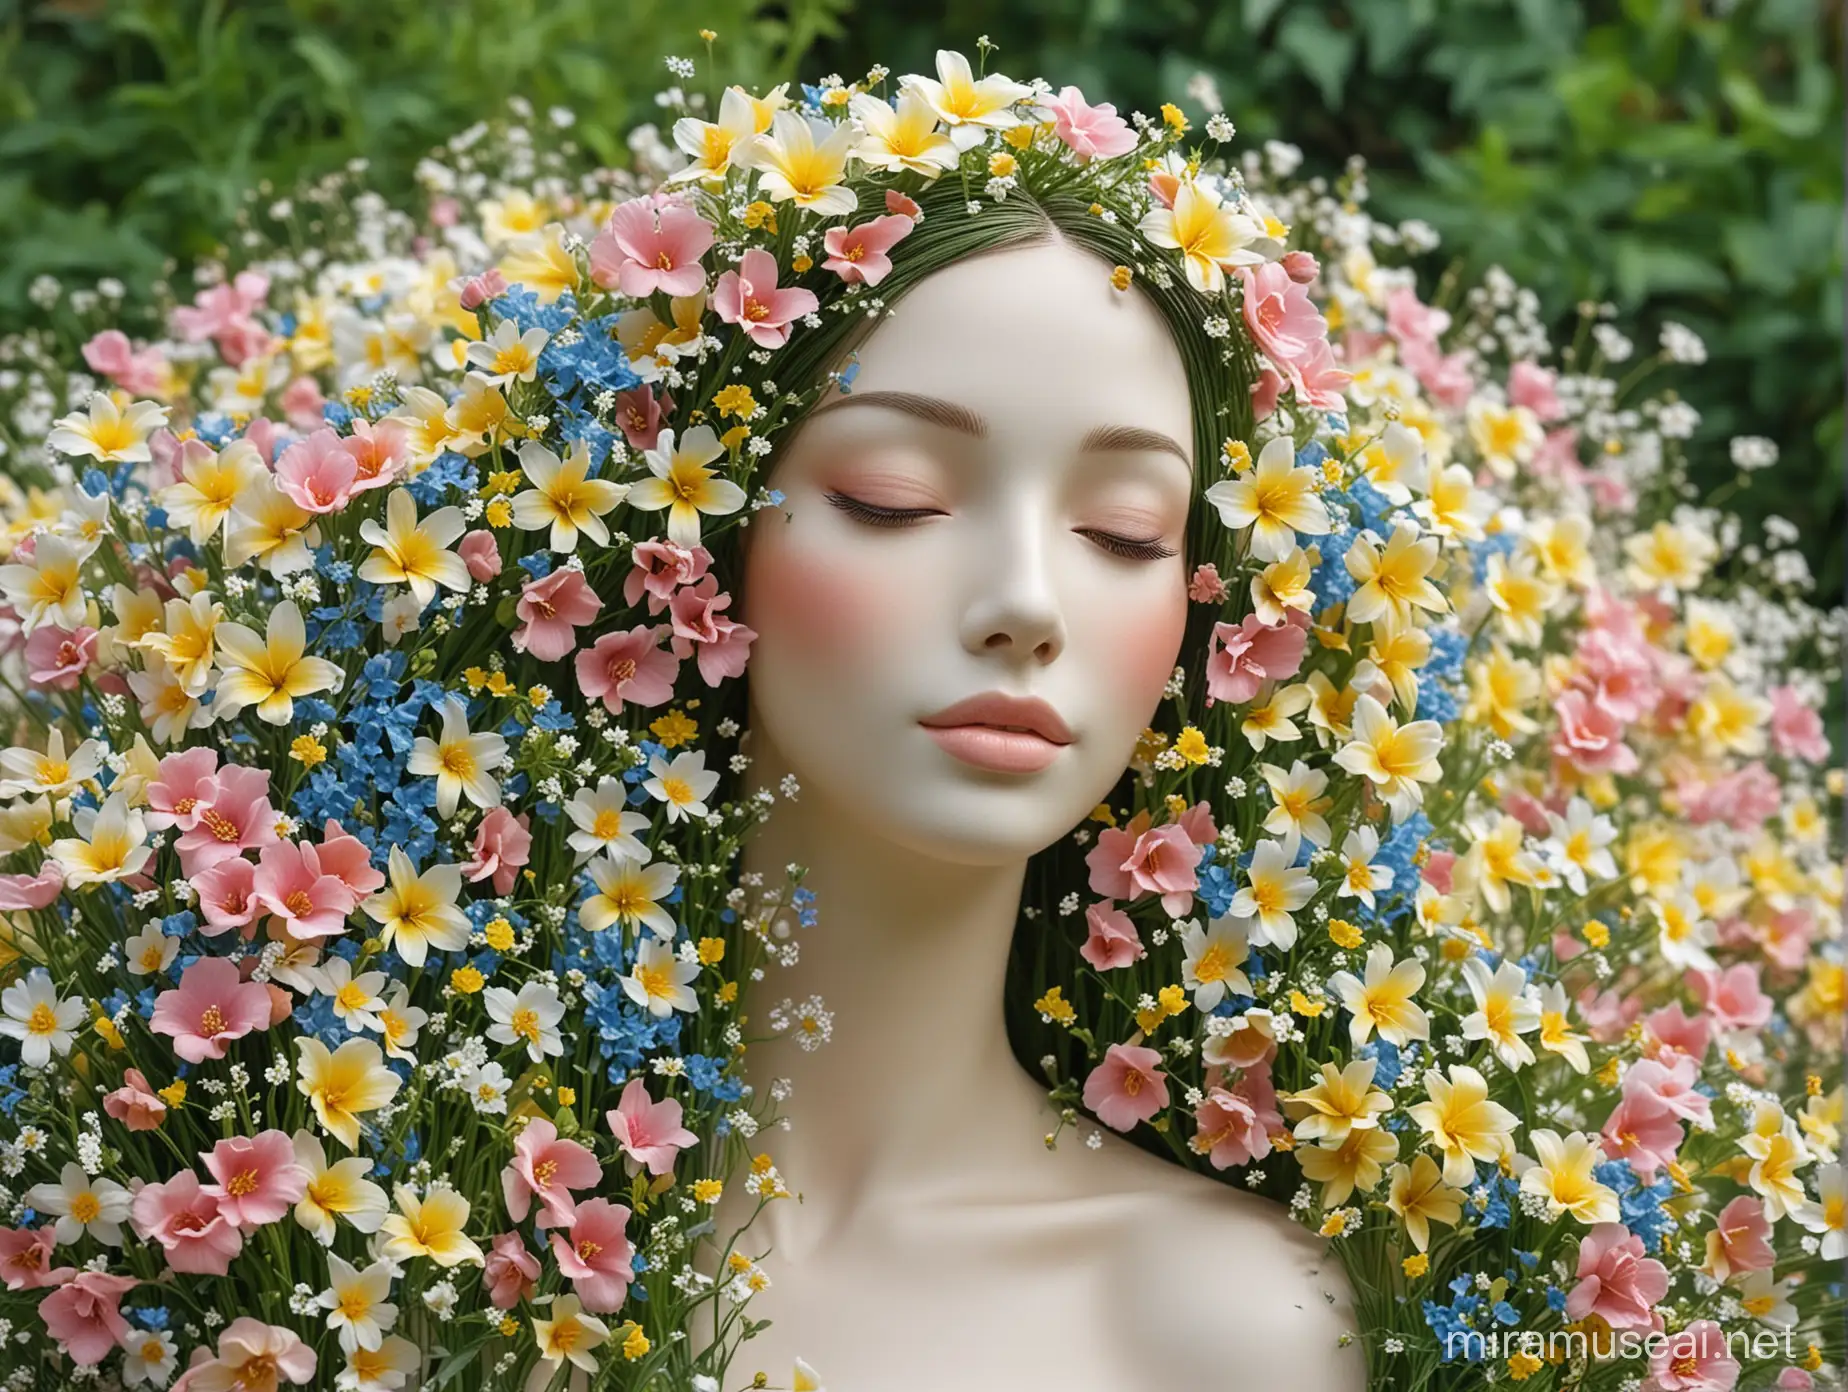 Graceful Flower Sculpture Woman Dancing in Nature